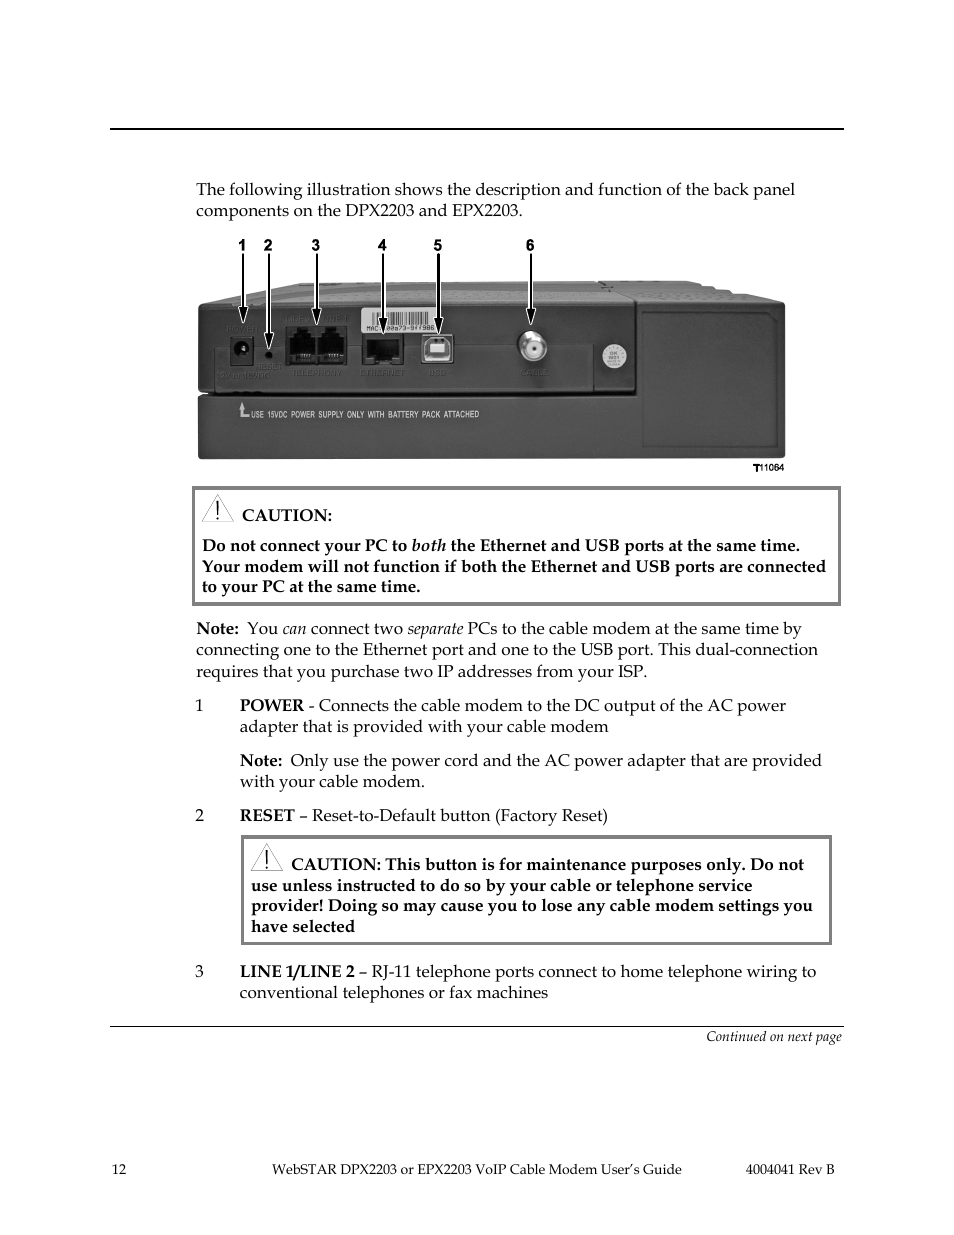 Webstar cable modem back panel, Back panel components | Scientific Atlanta WebSTAR EPX2203 Manual | Page 13 55 Original mode